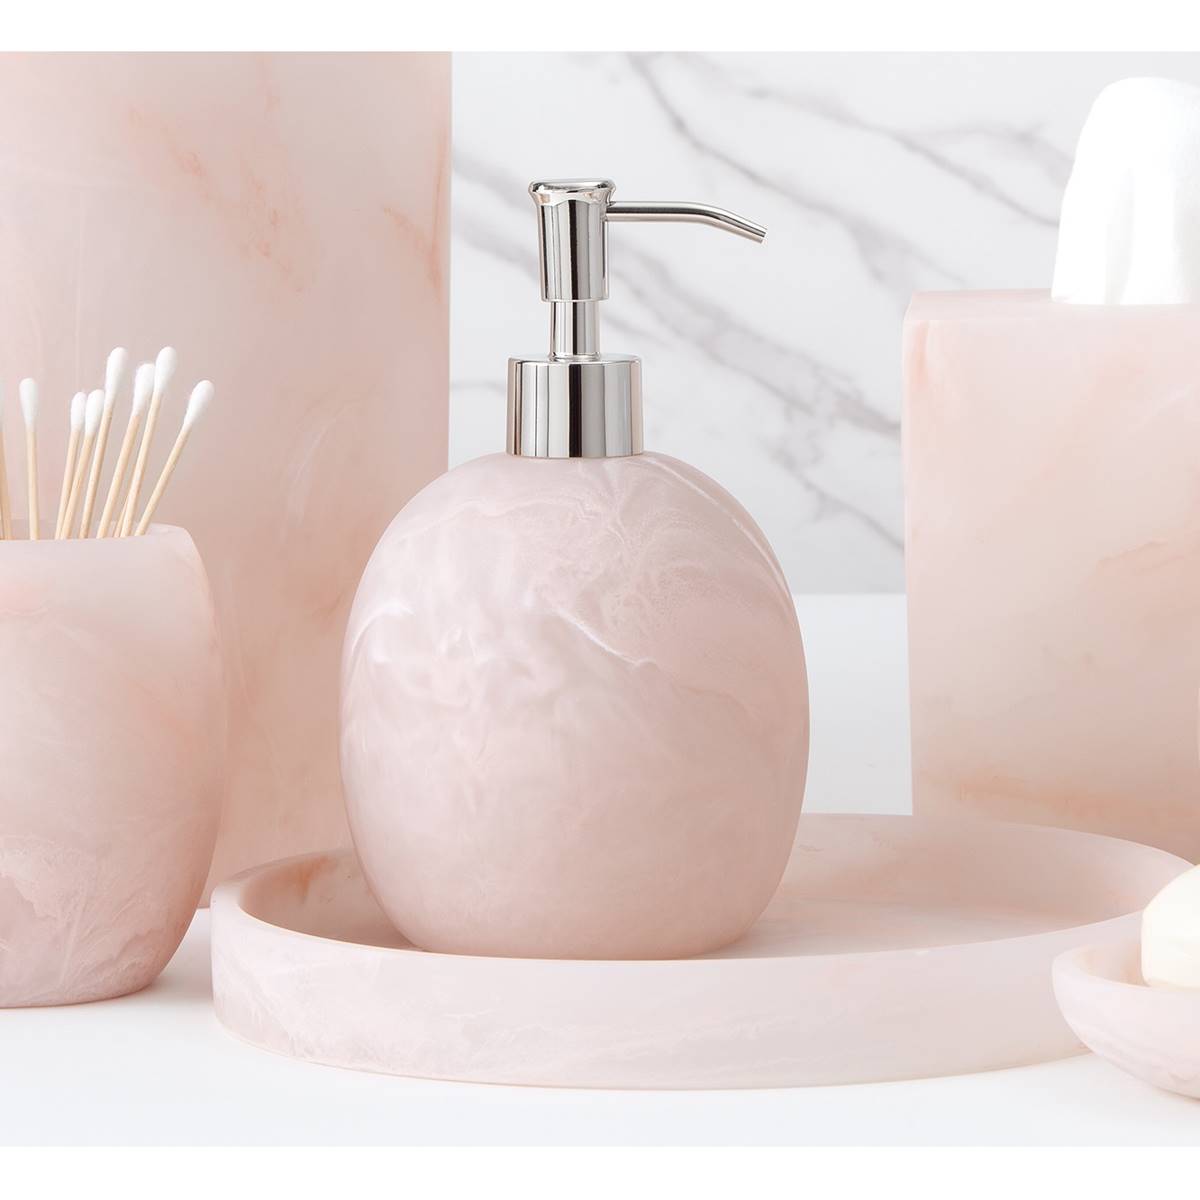 Cassadecor Rose Bath Accessories - Toothbrush Holder